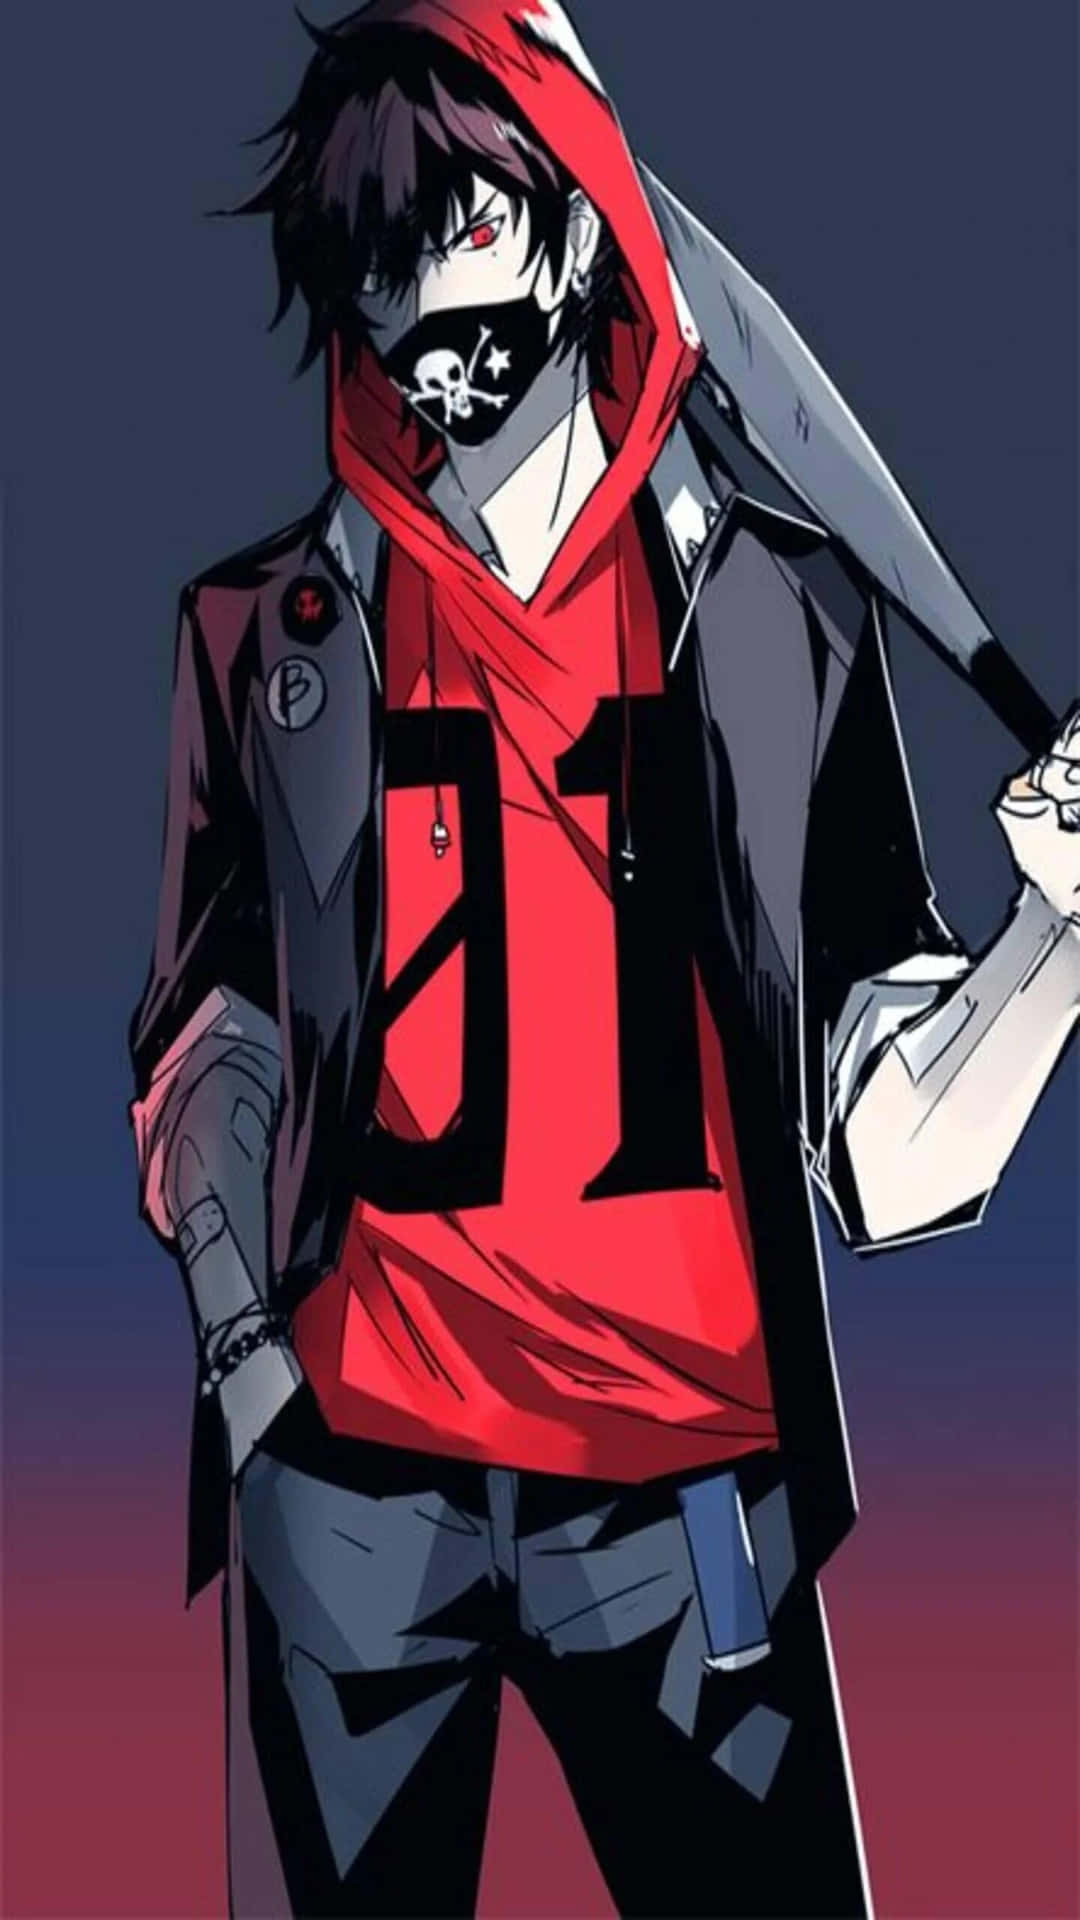 44+] Anime Guy With Hoodie Wallpapers - WallpaperSafari